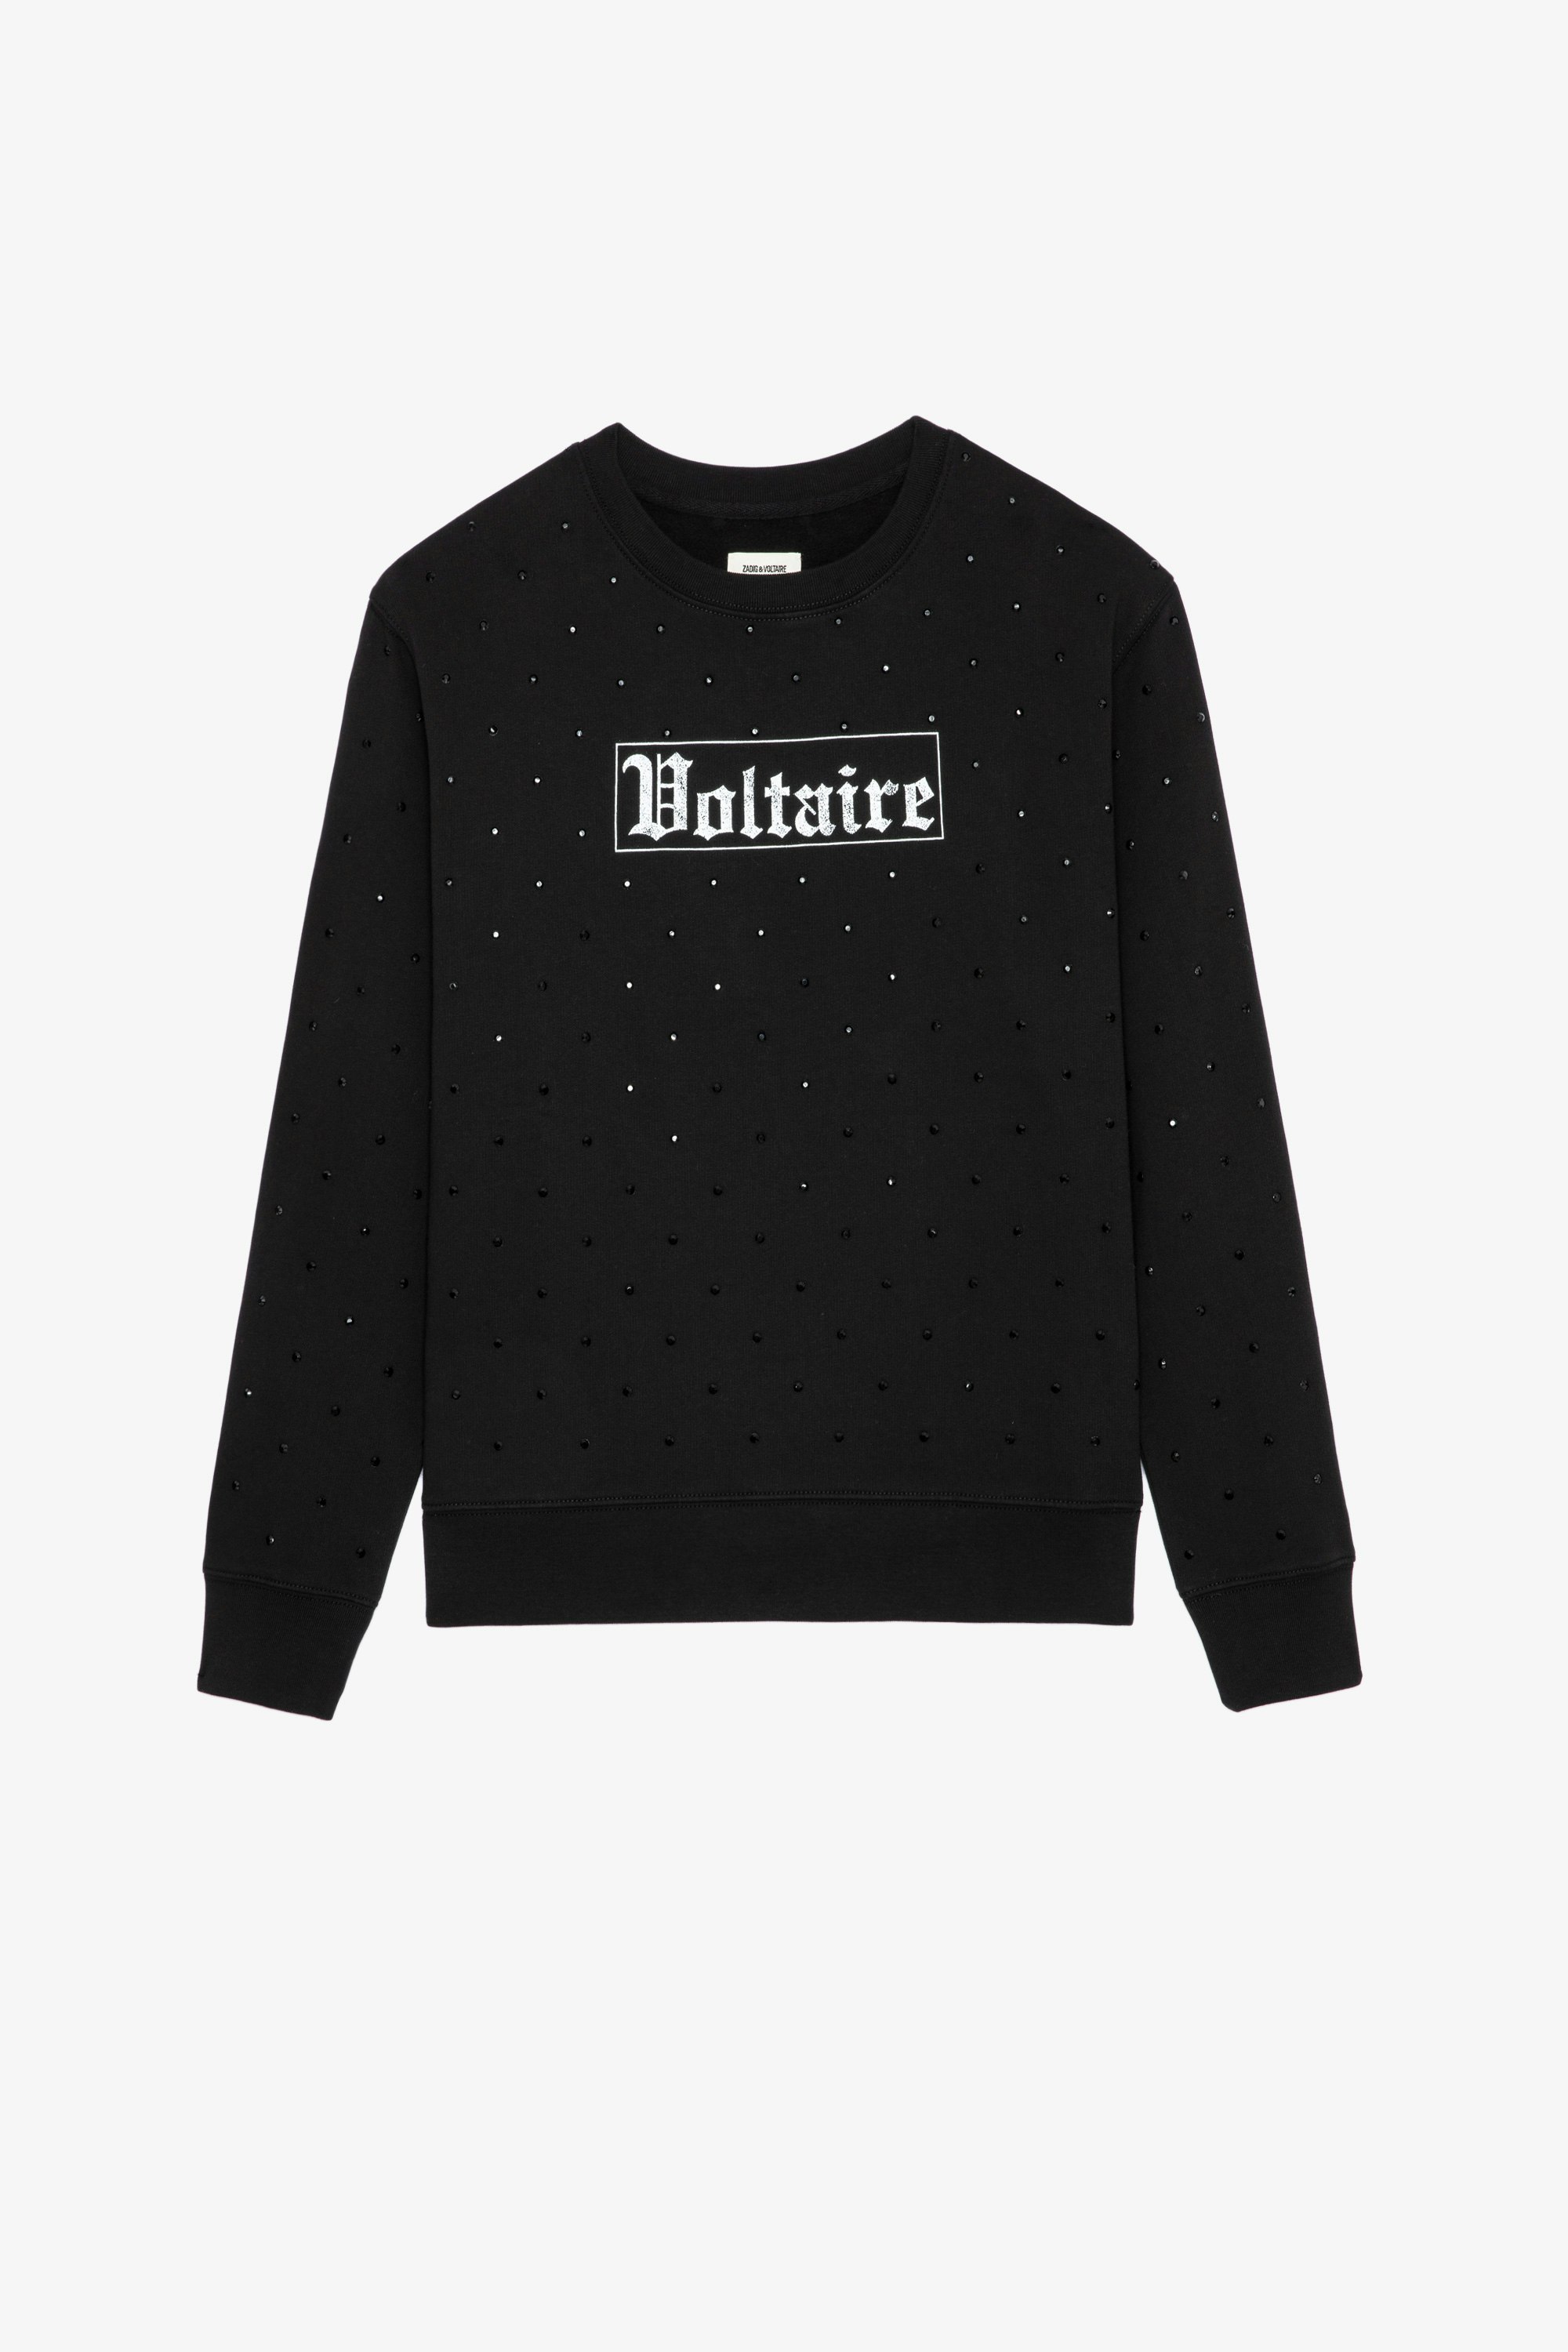 Nala スウェット Women’s black cotton sweatshirt with rhinestones and Voltaire signature